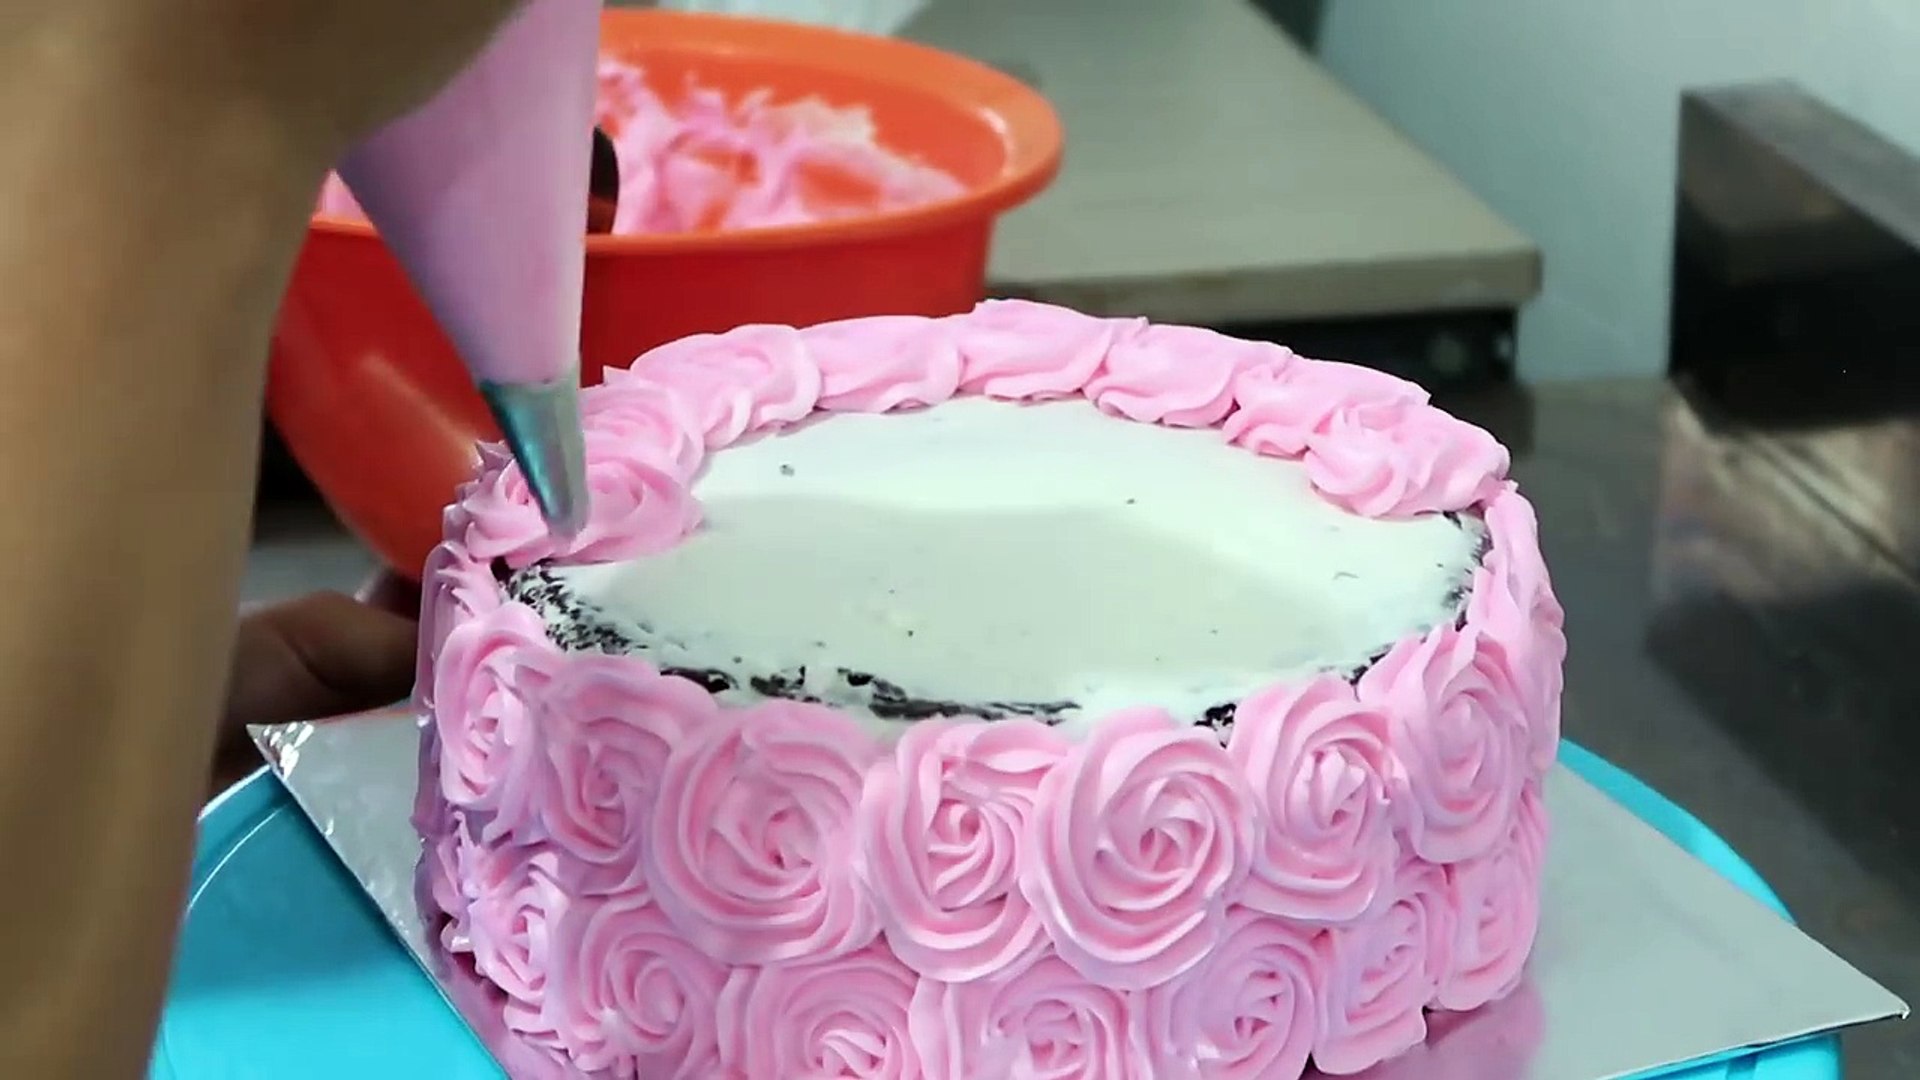 Kue Ultah Untuk Ank2 Sederhana - Resep Dan Cara Membuat ...